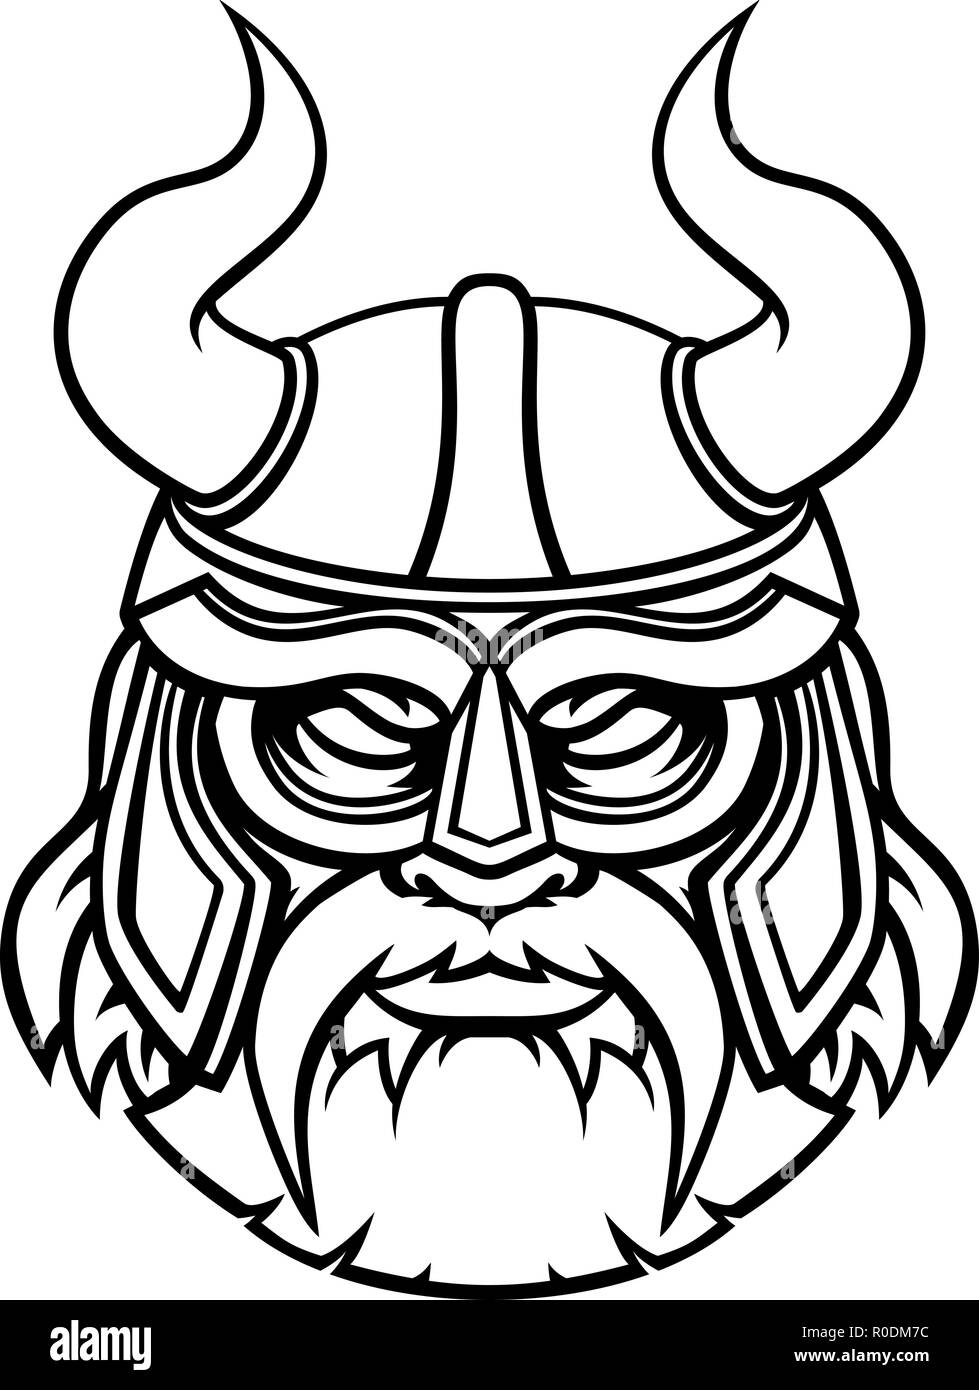 Viking Warrior Sports Mascot Character Stock Vector